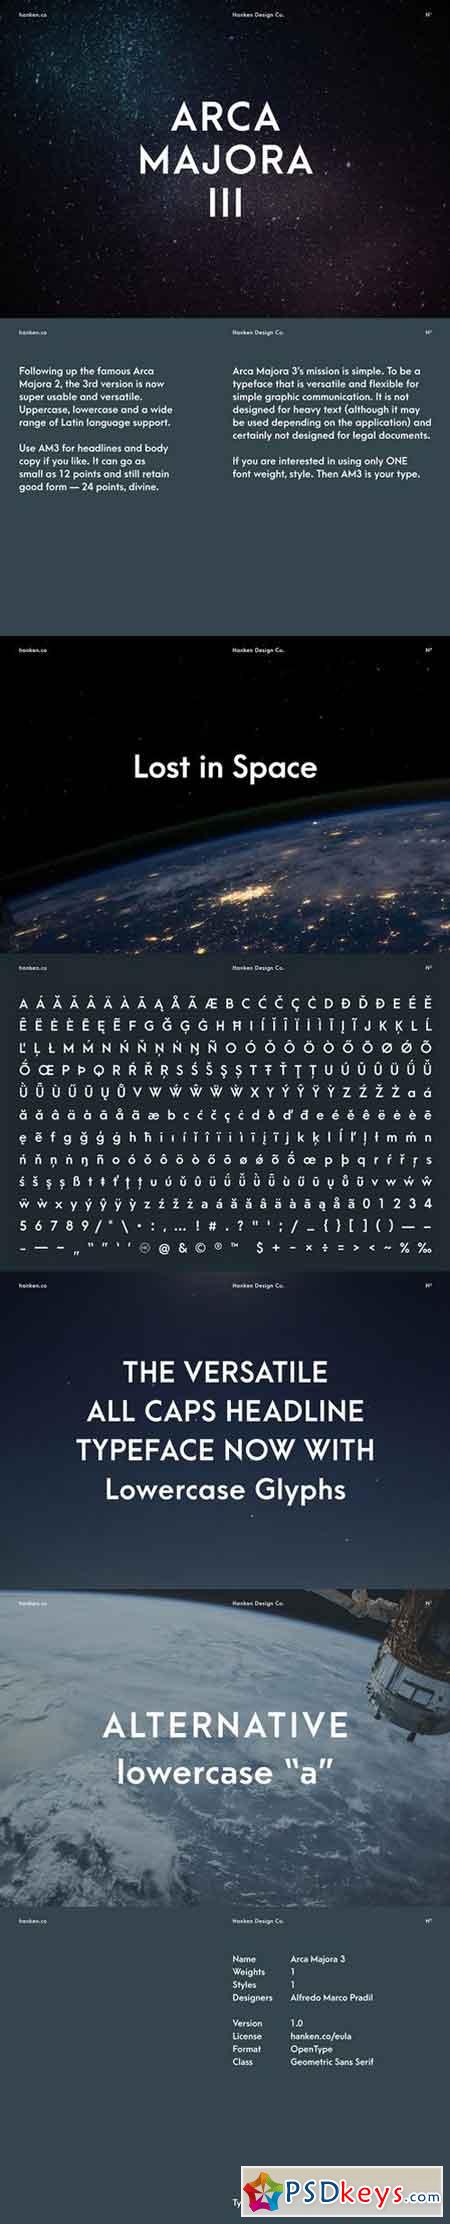 Arca Majora 3 Typeface